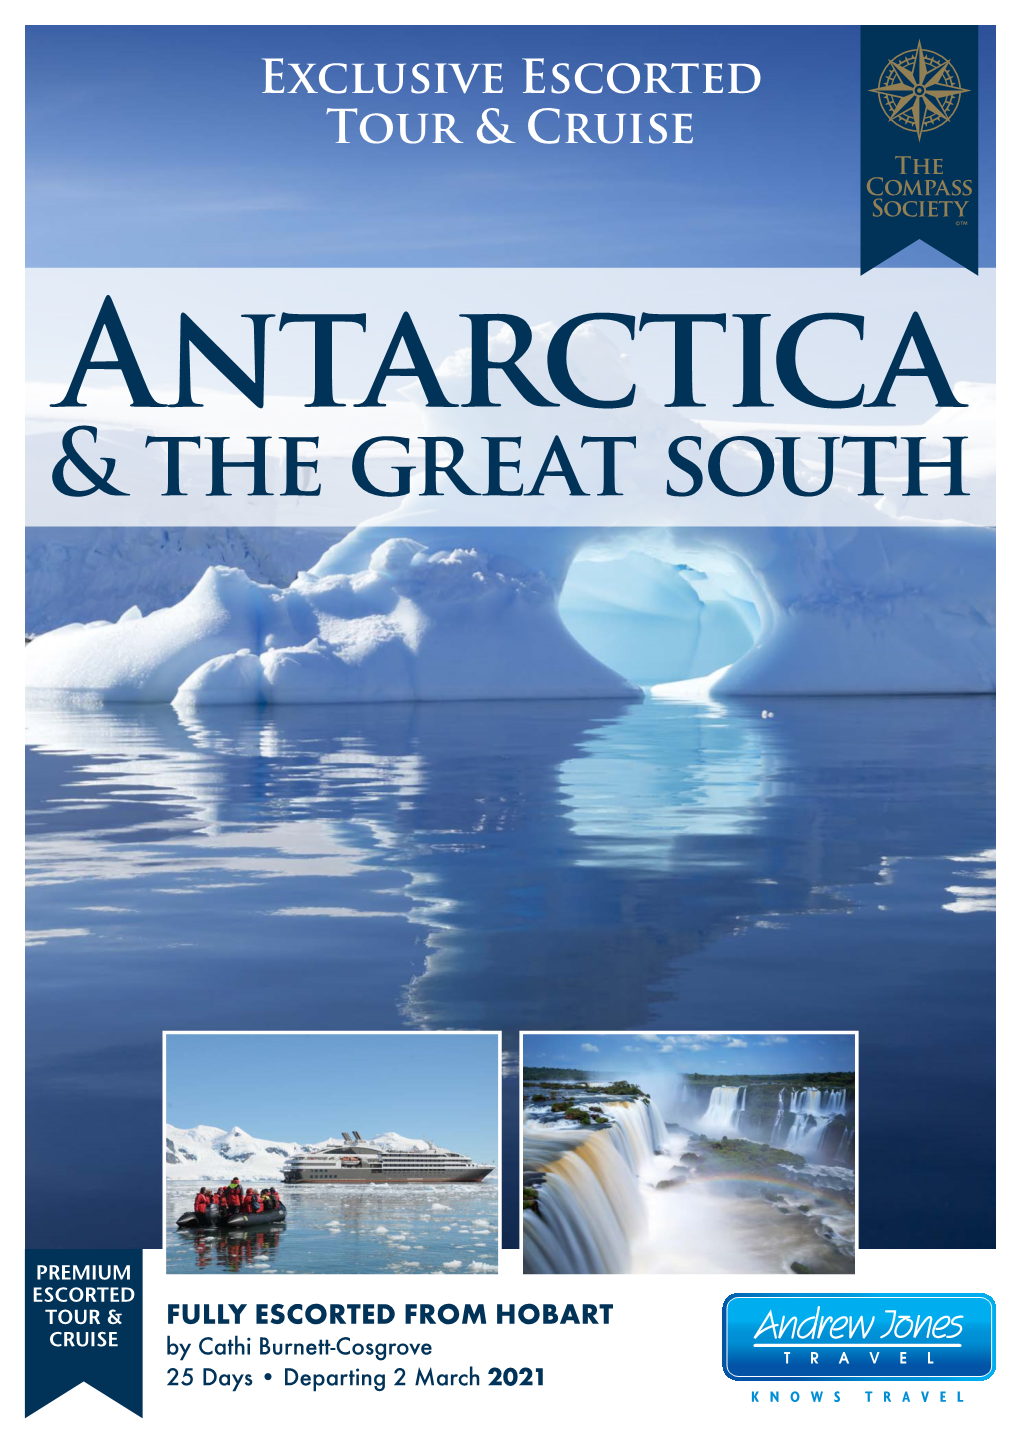 2021 Exclusive Escorted TOUR & Cruise Antarctica & the Great